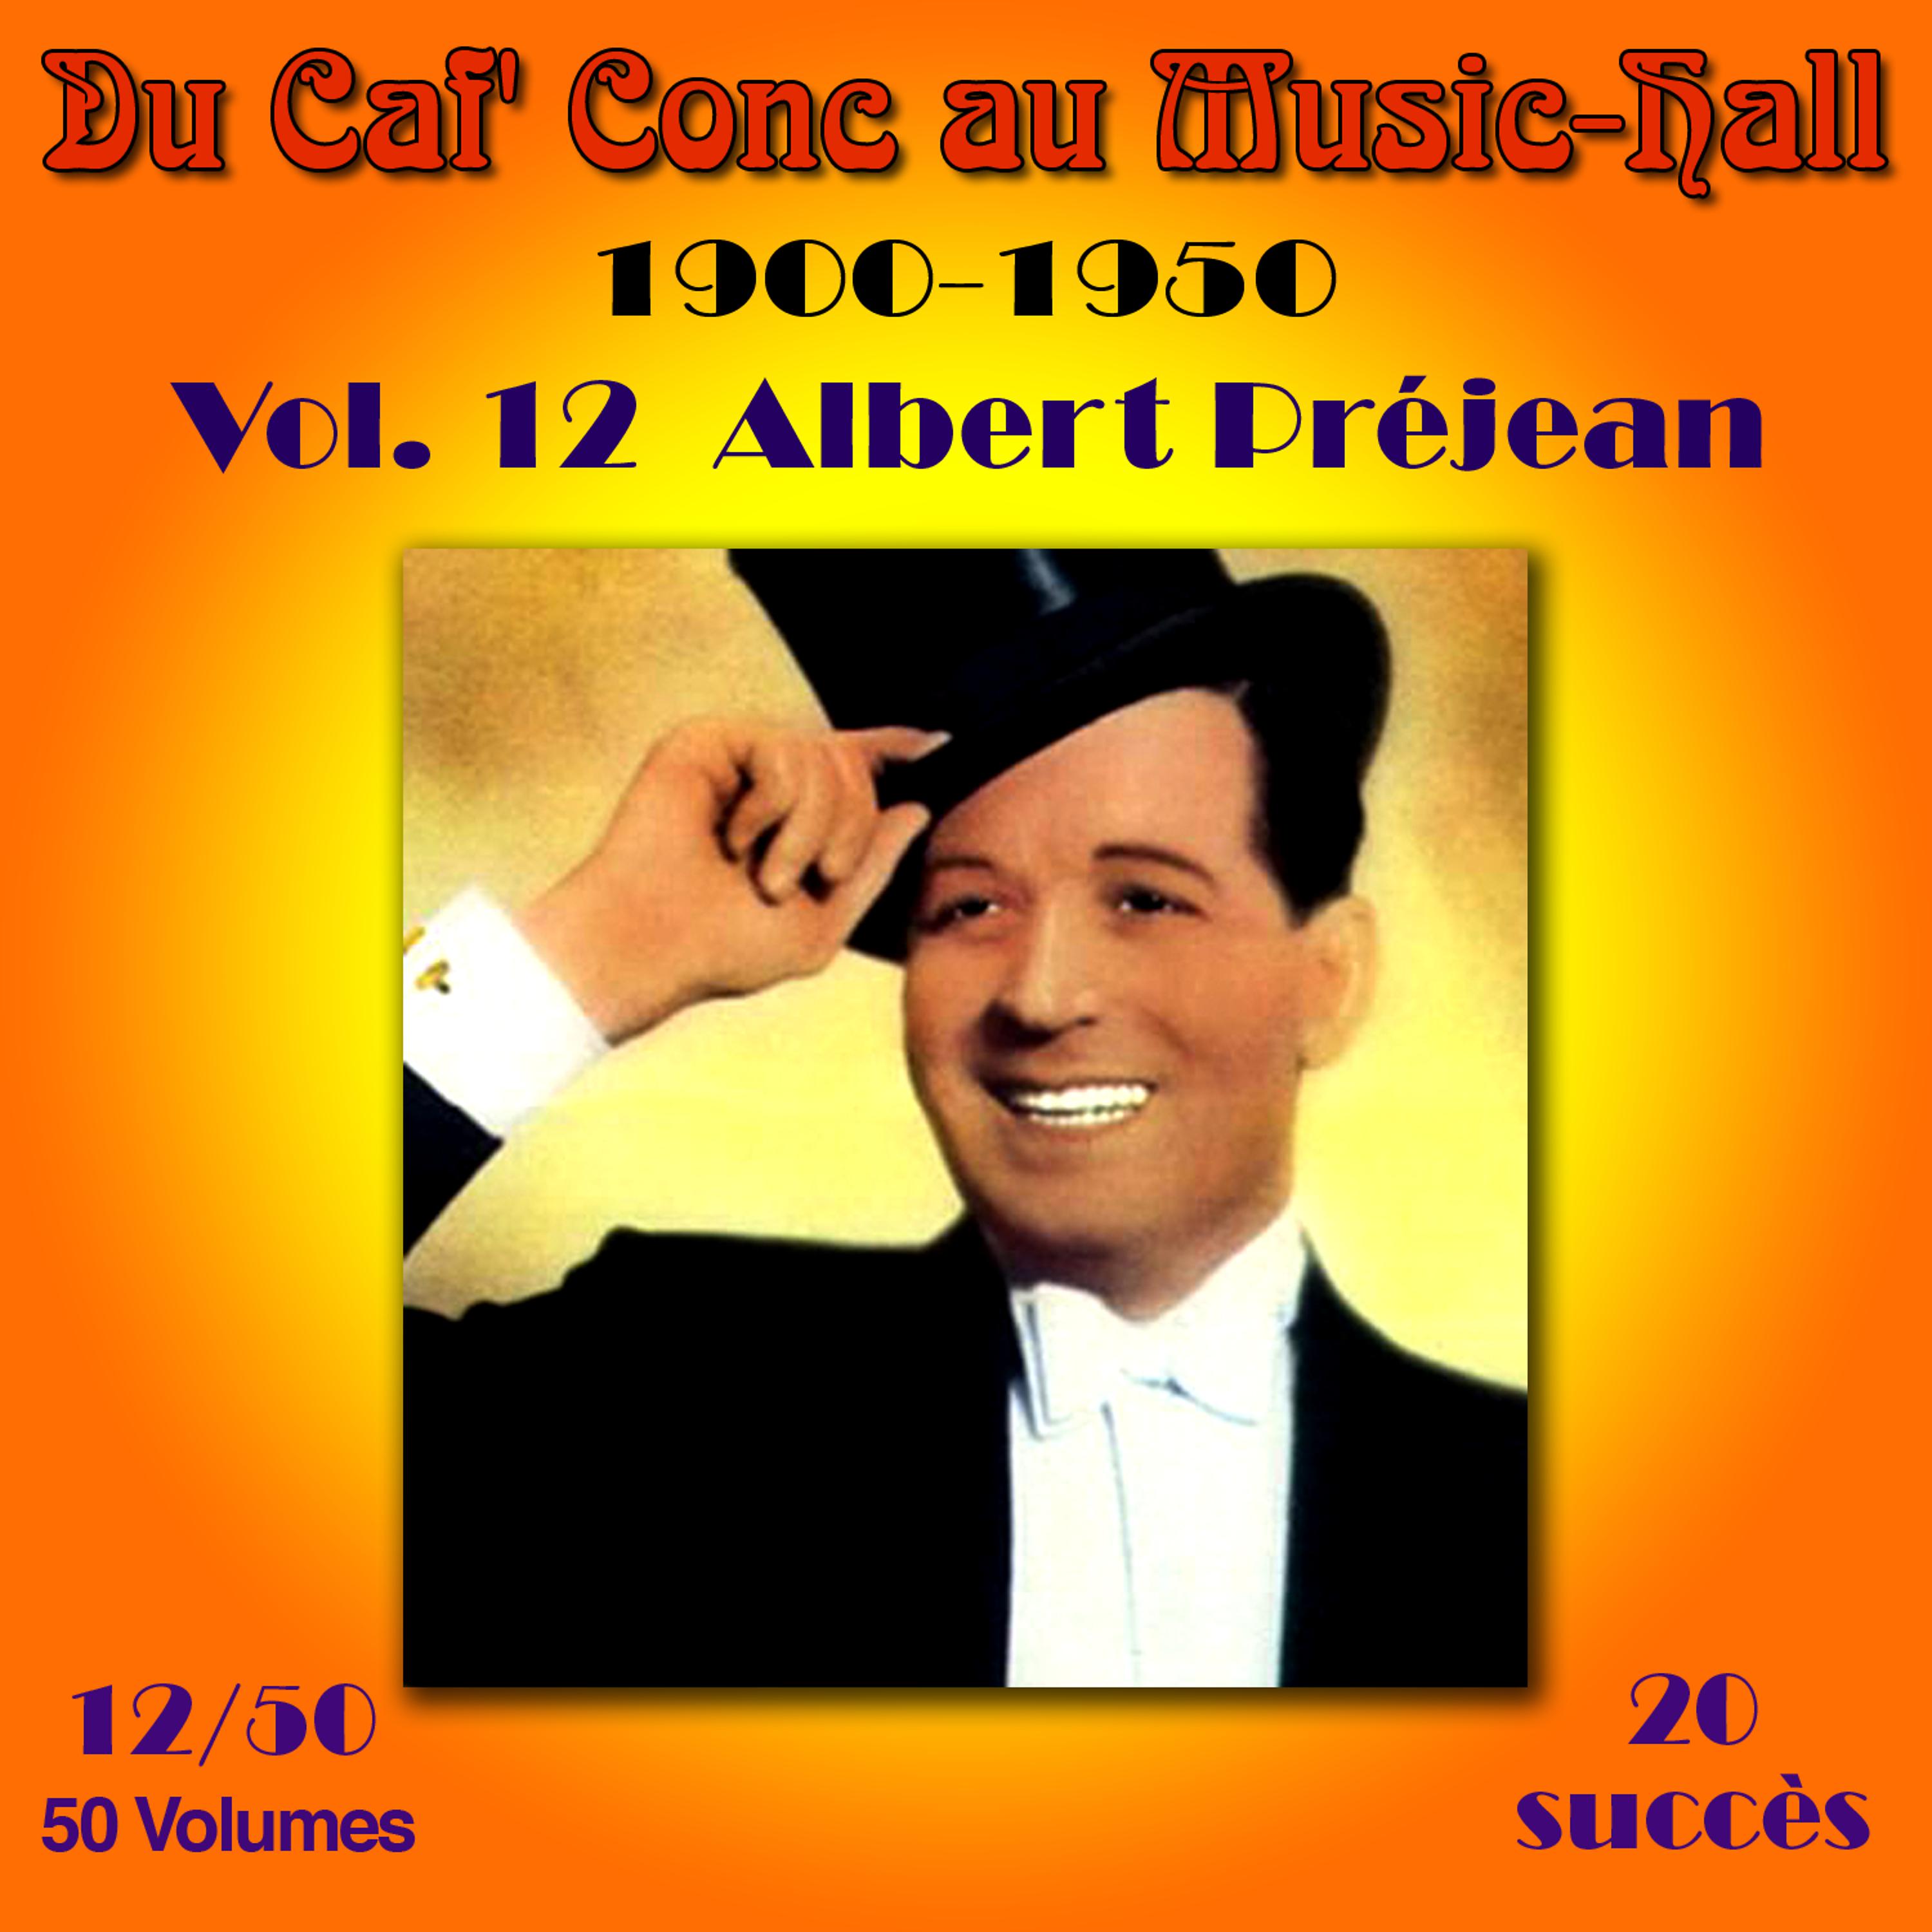 Постер альбома Du Caf' Conc au Music-Hall (1900-1950) en 50 volumes -  Vol. 12/50